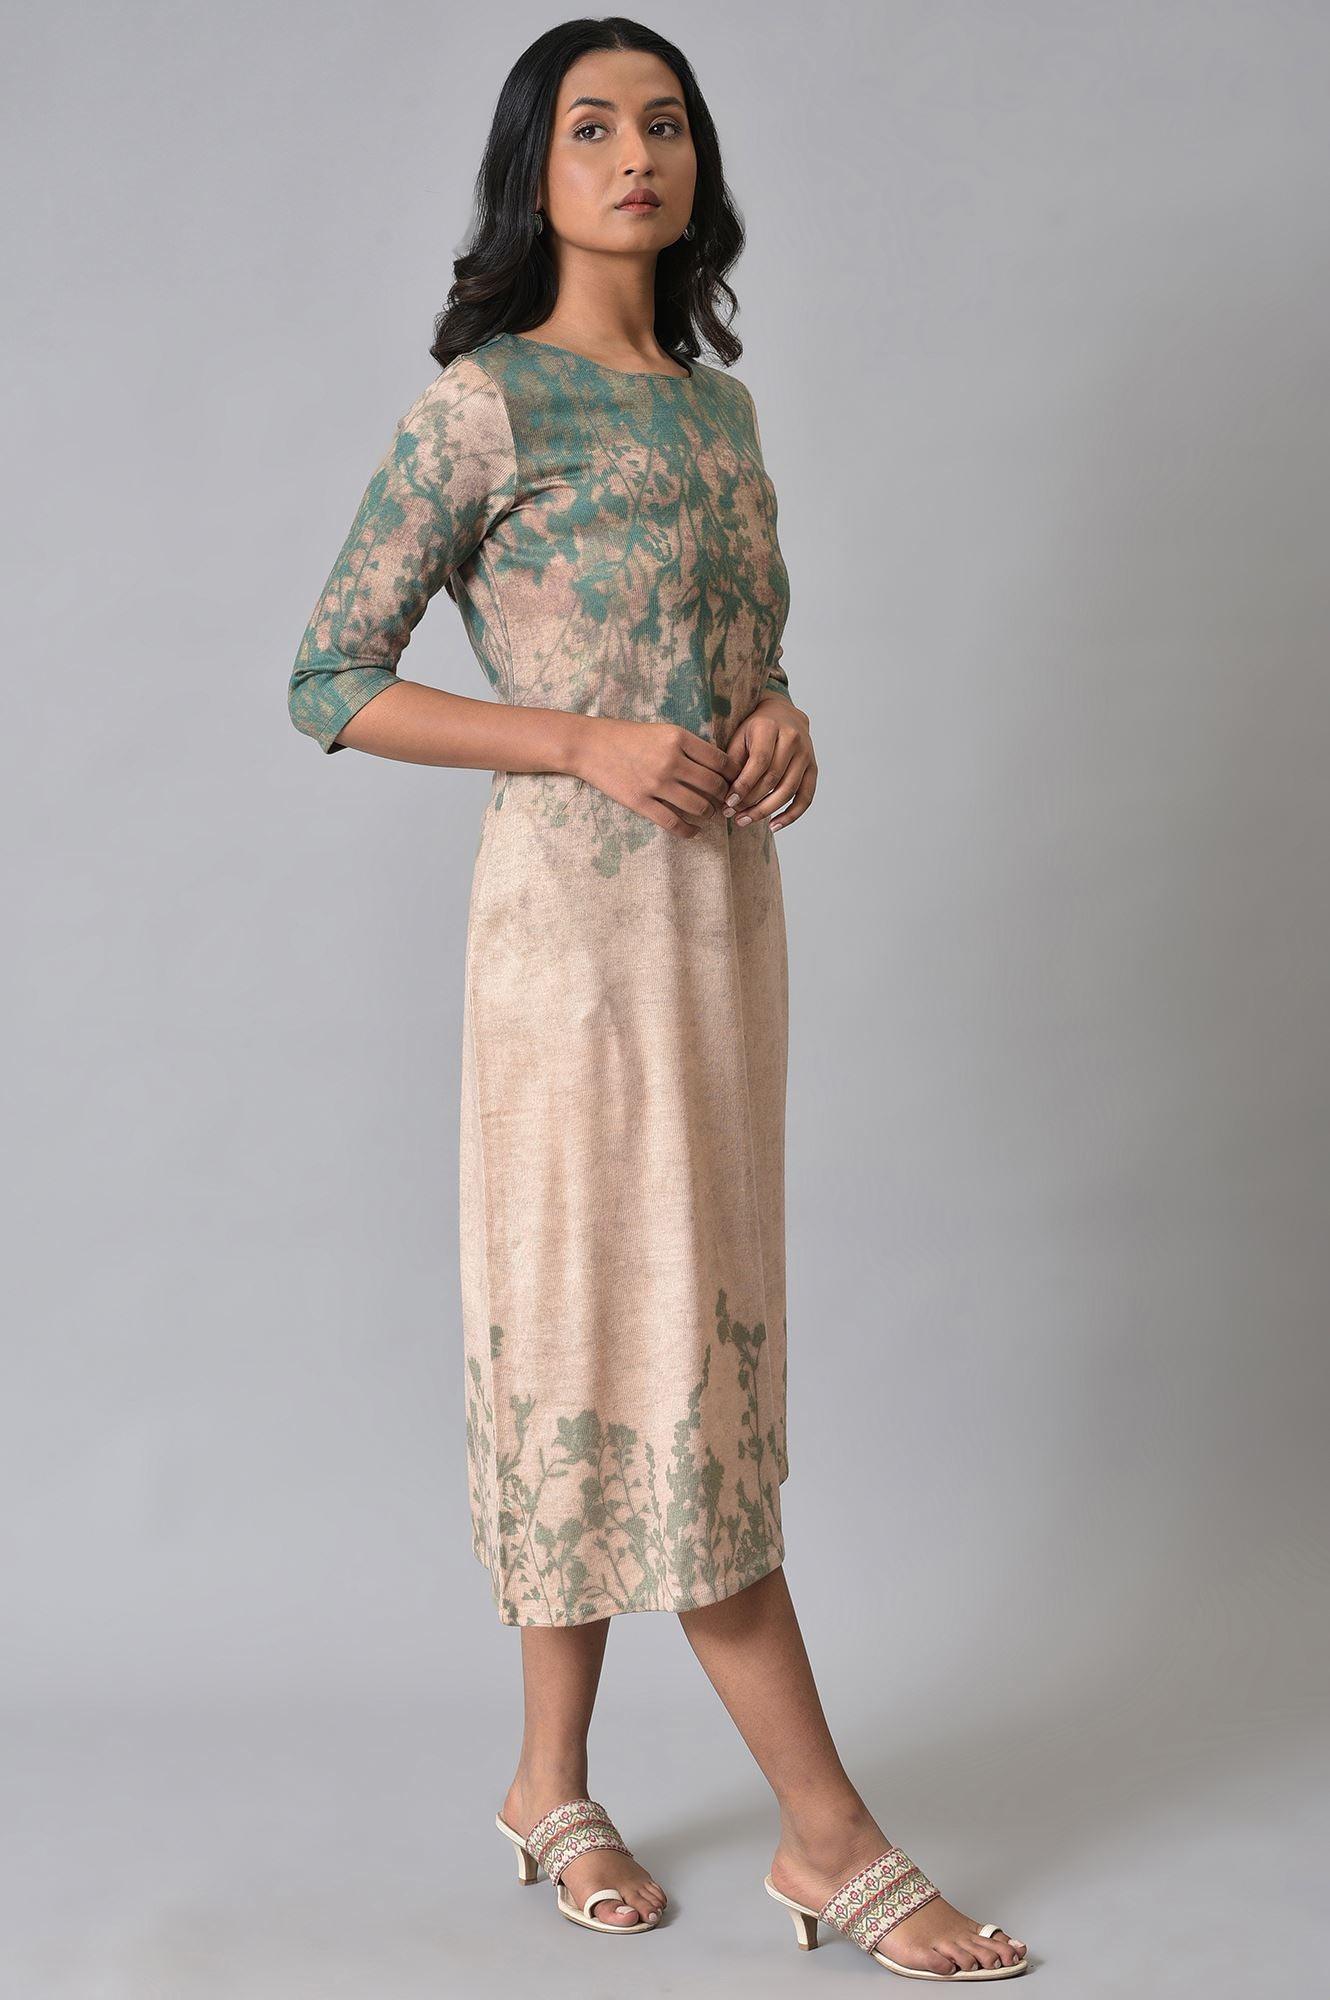 Ecru Western Dress With Floral Print - wforwoman